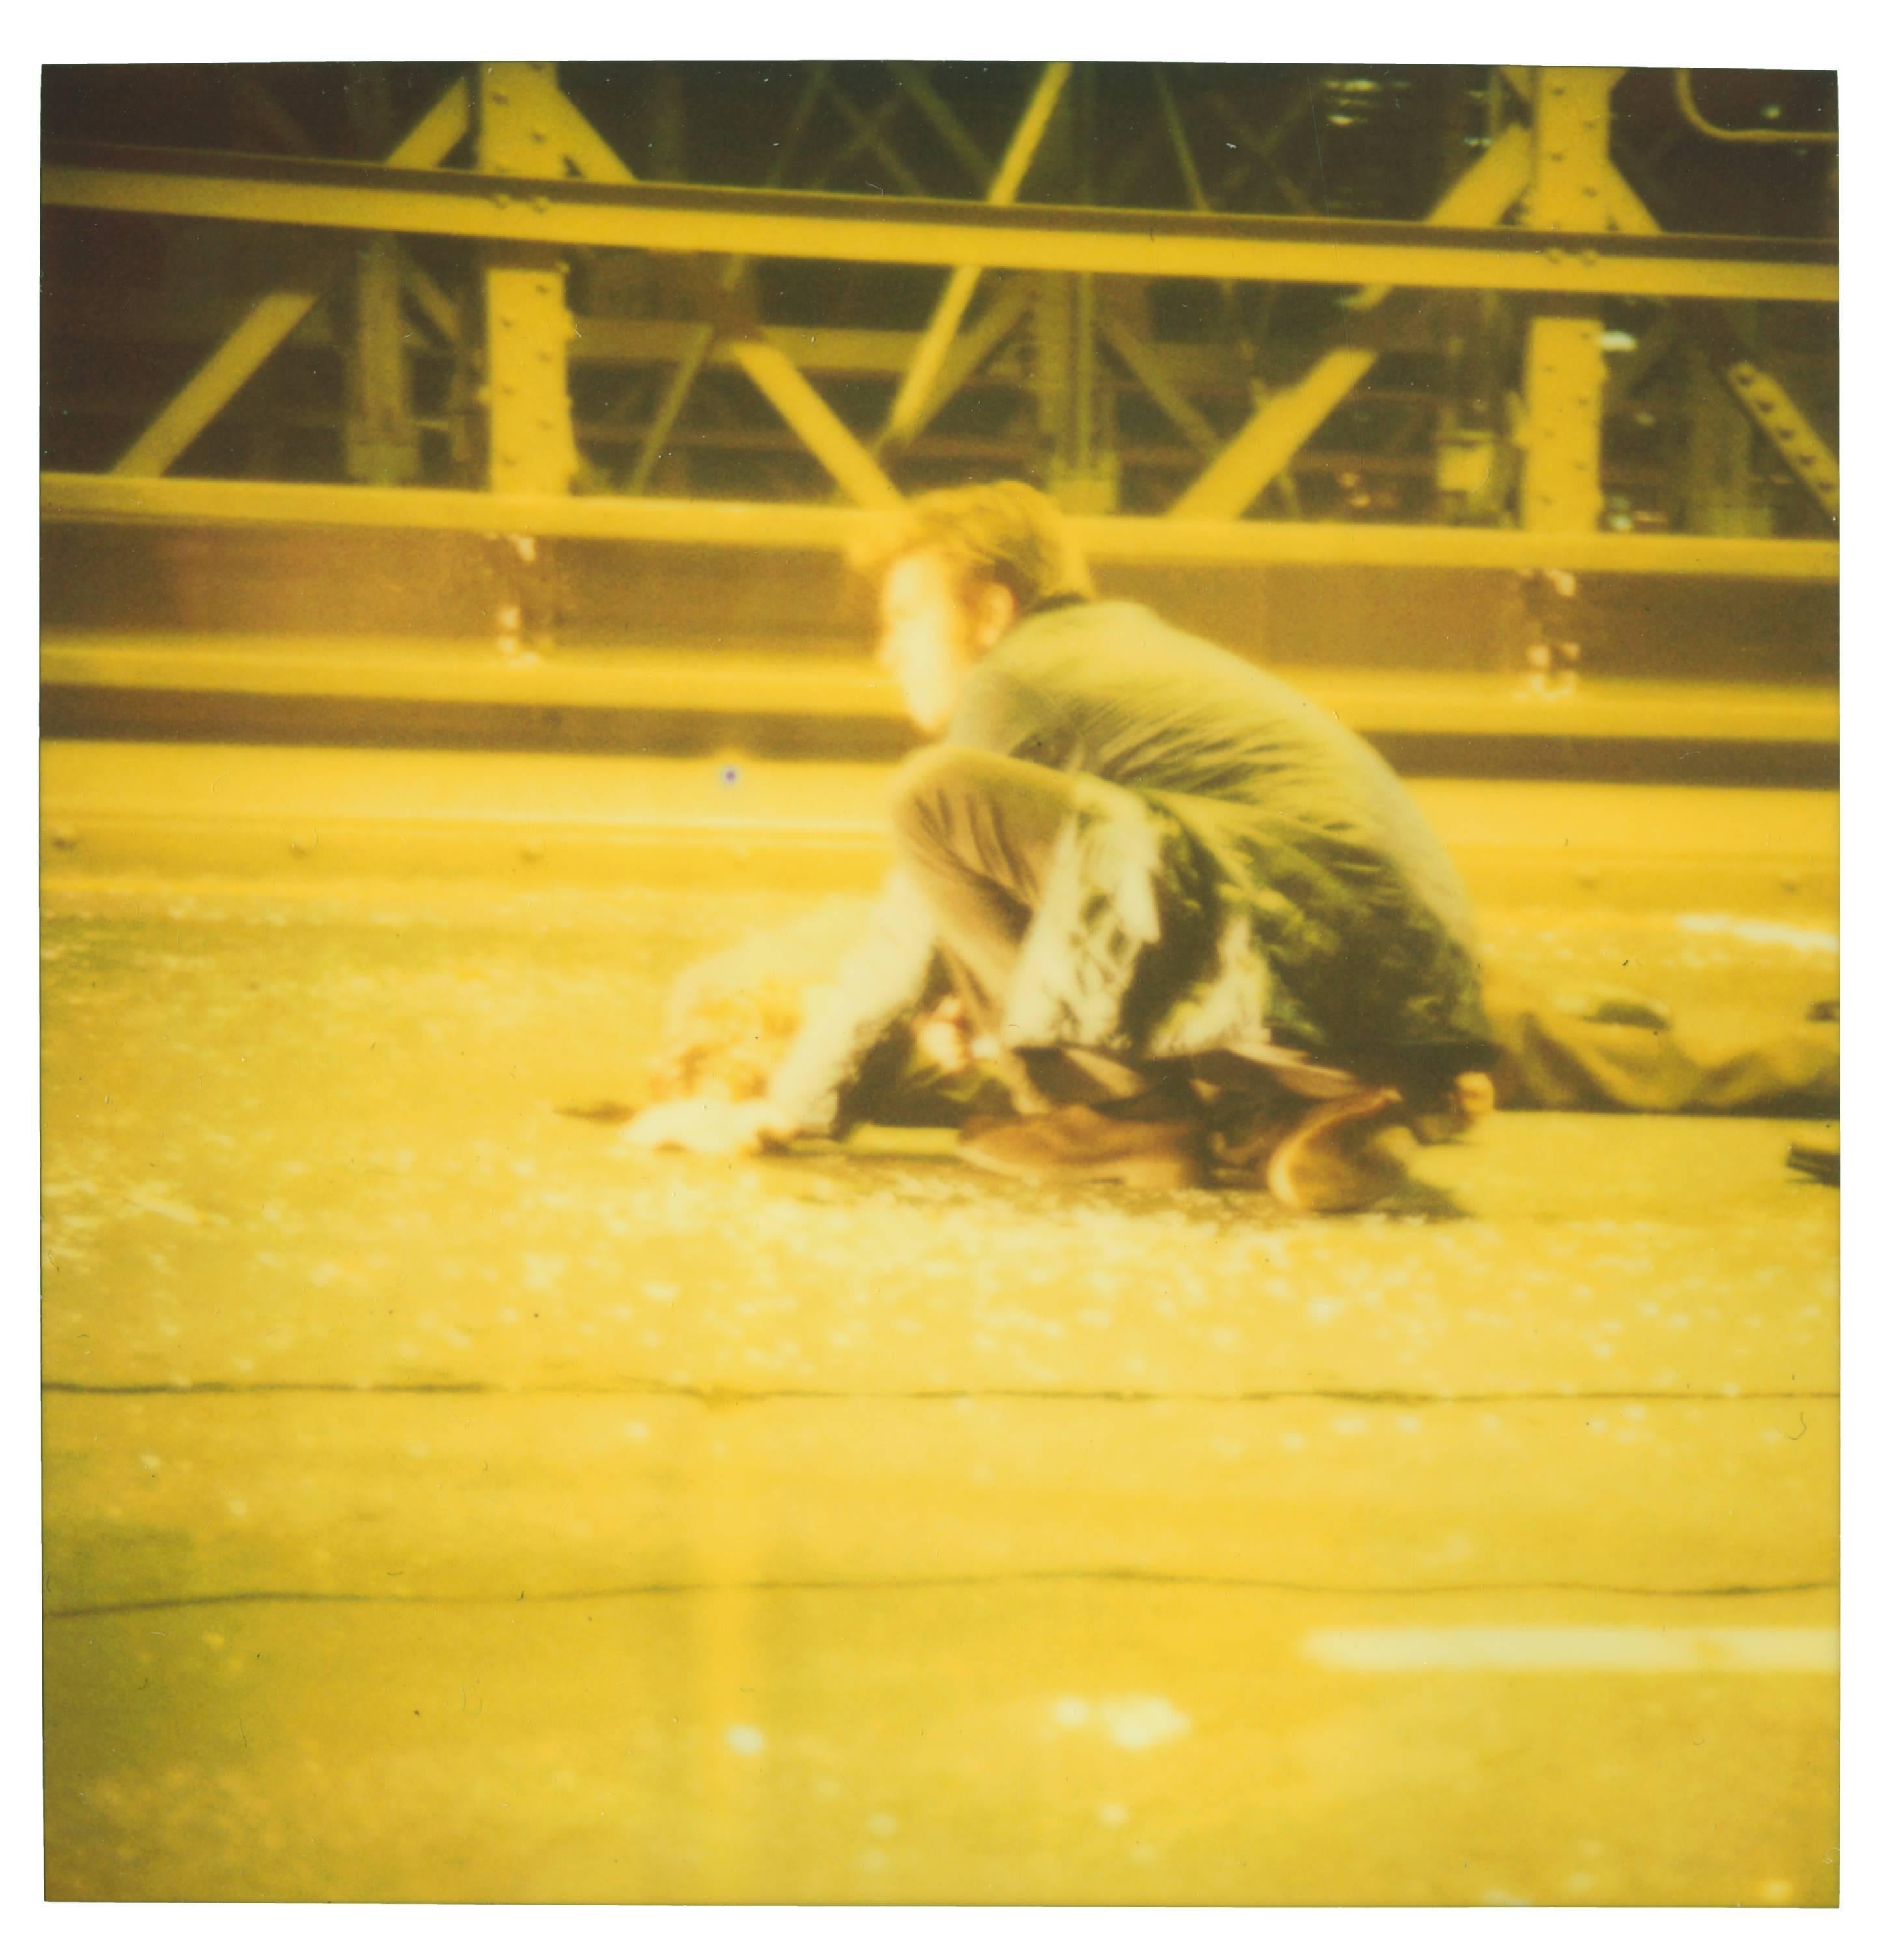 Accident II - avec Ewan McGregor et Ryan Gosling, Polaroid, XXIe siècle, couleur